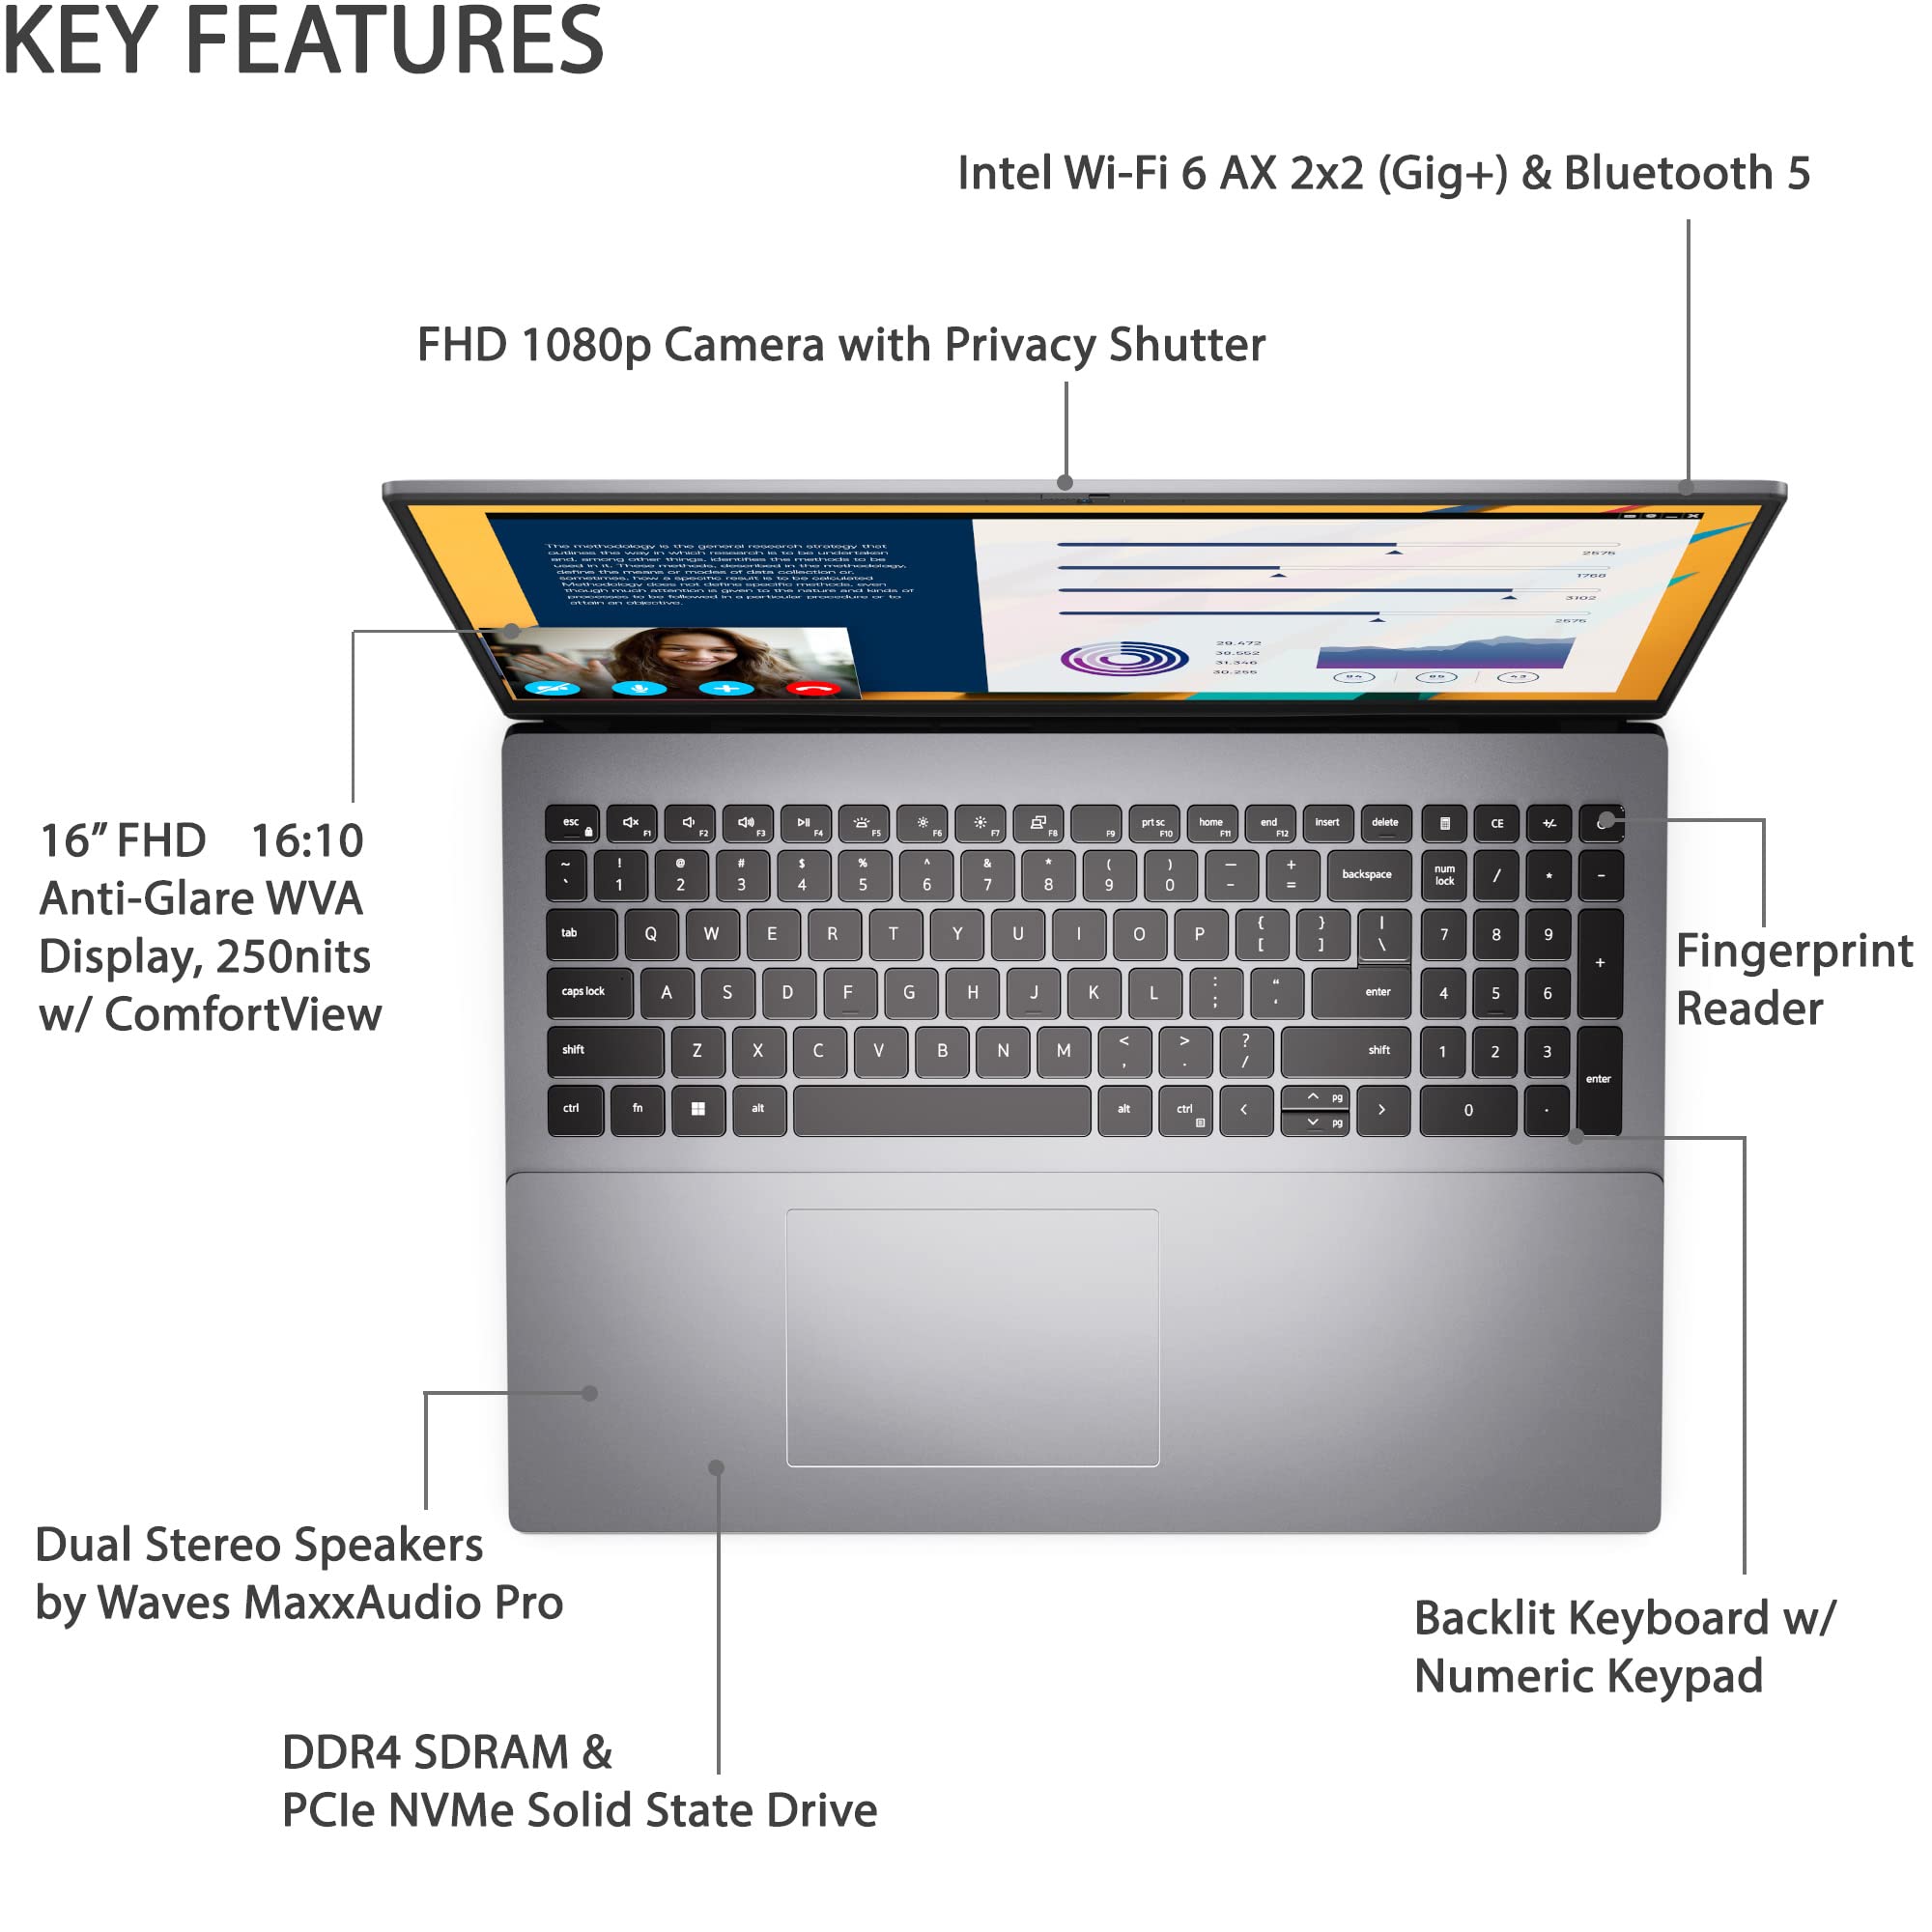 Dell Vostro 5620 Business Laptop, 16" FHD Display, 12th Gen Intel Core i7-1260P, 32GB RAM, 1TB SSD, FHD Webcam, HDMI, Backlit Keyboard, Fingerprint Reader, Wi-Fi 6, Windows 11 Pro, Silver